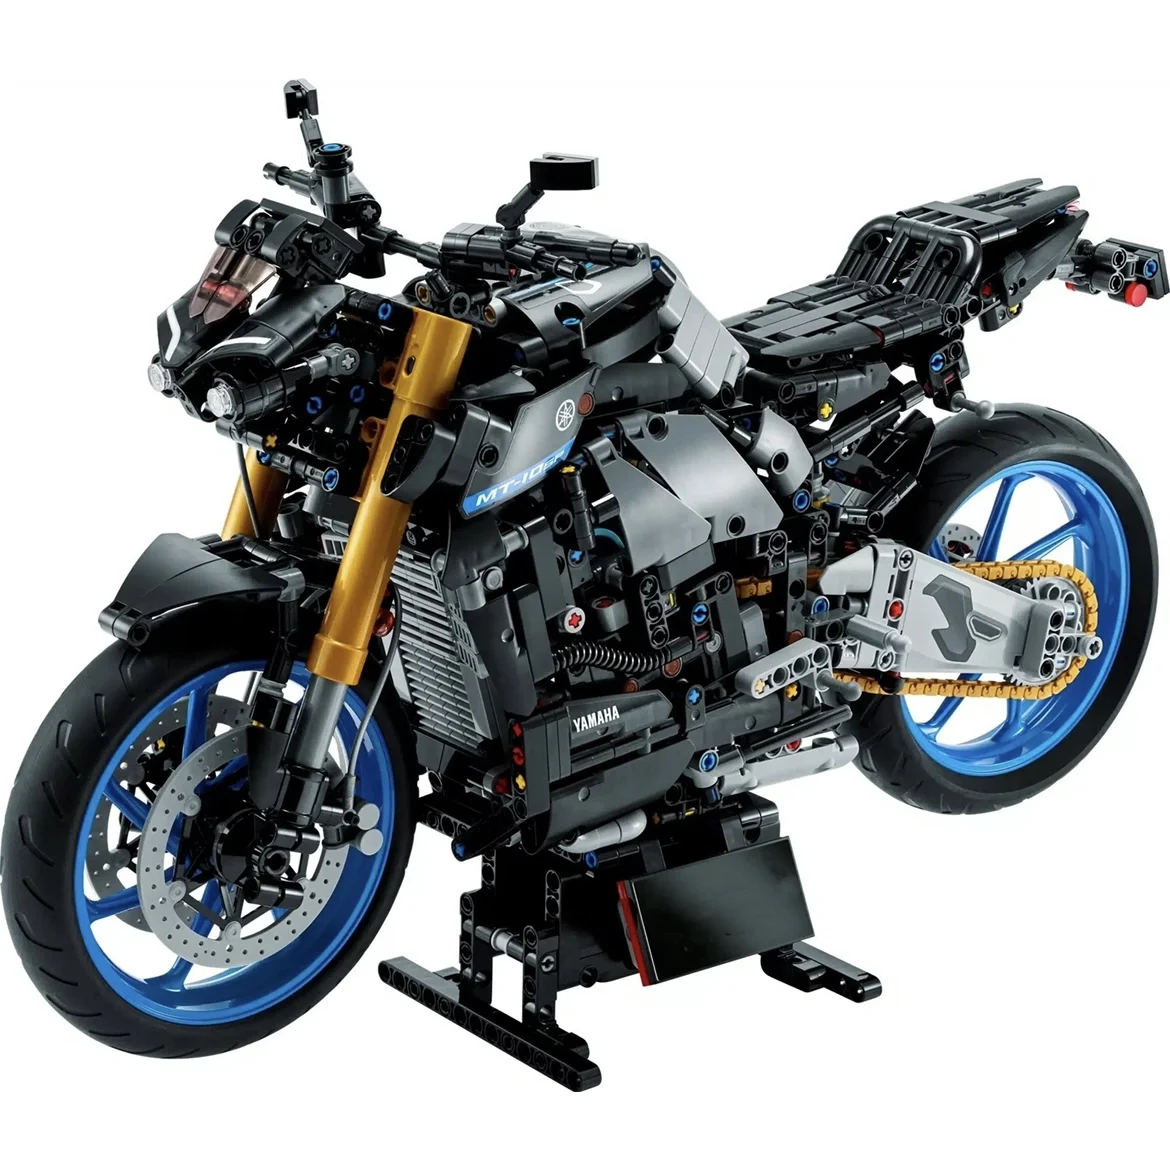 

Moc 42159 1478Pcs Yamahas MT-10 SP Motorcycle Technical Bricks Building Blocks Toys for Children Boy Birthday Gifts